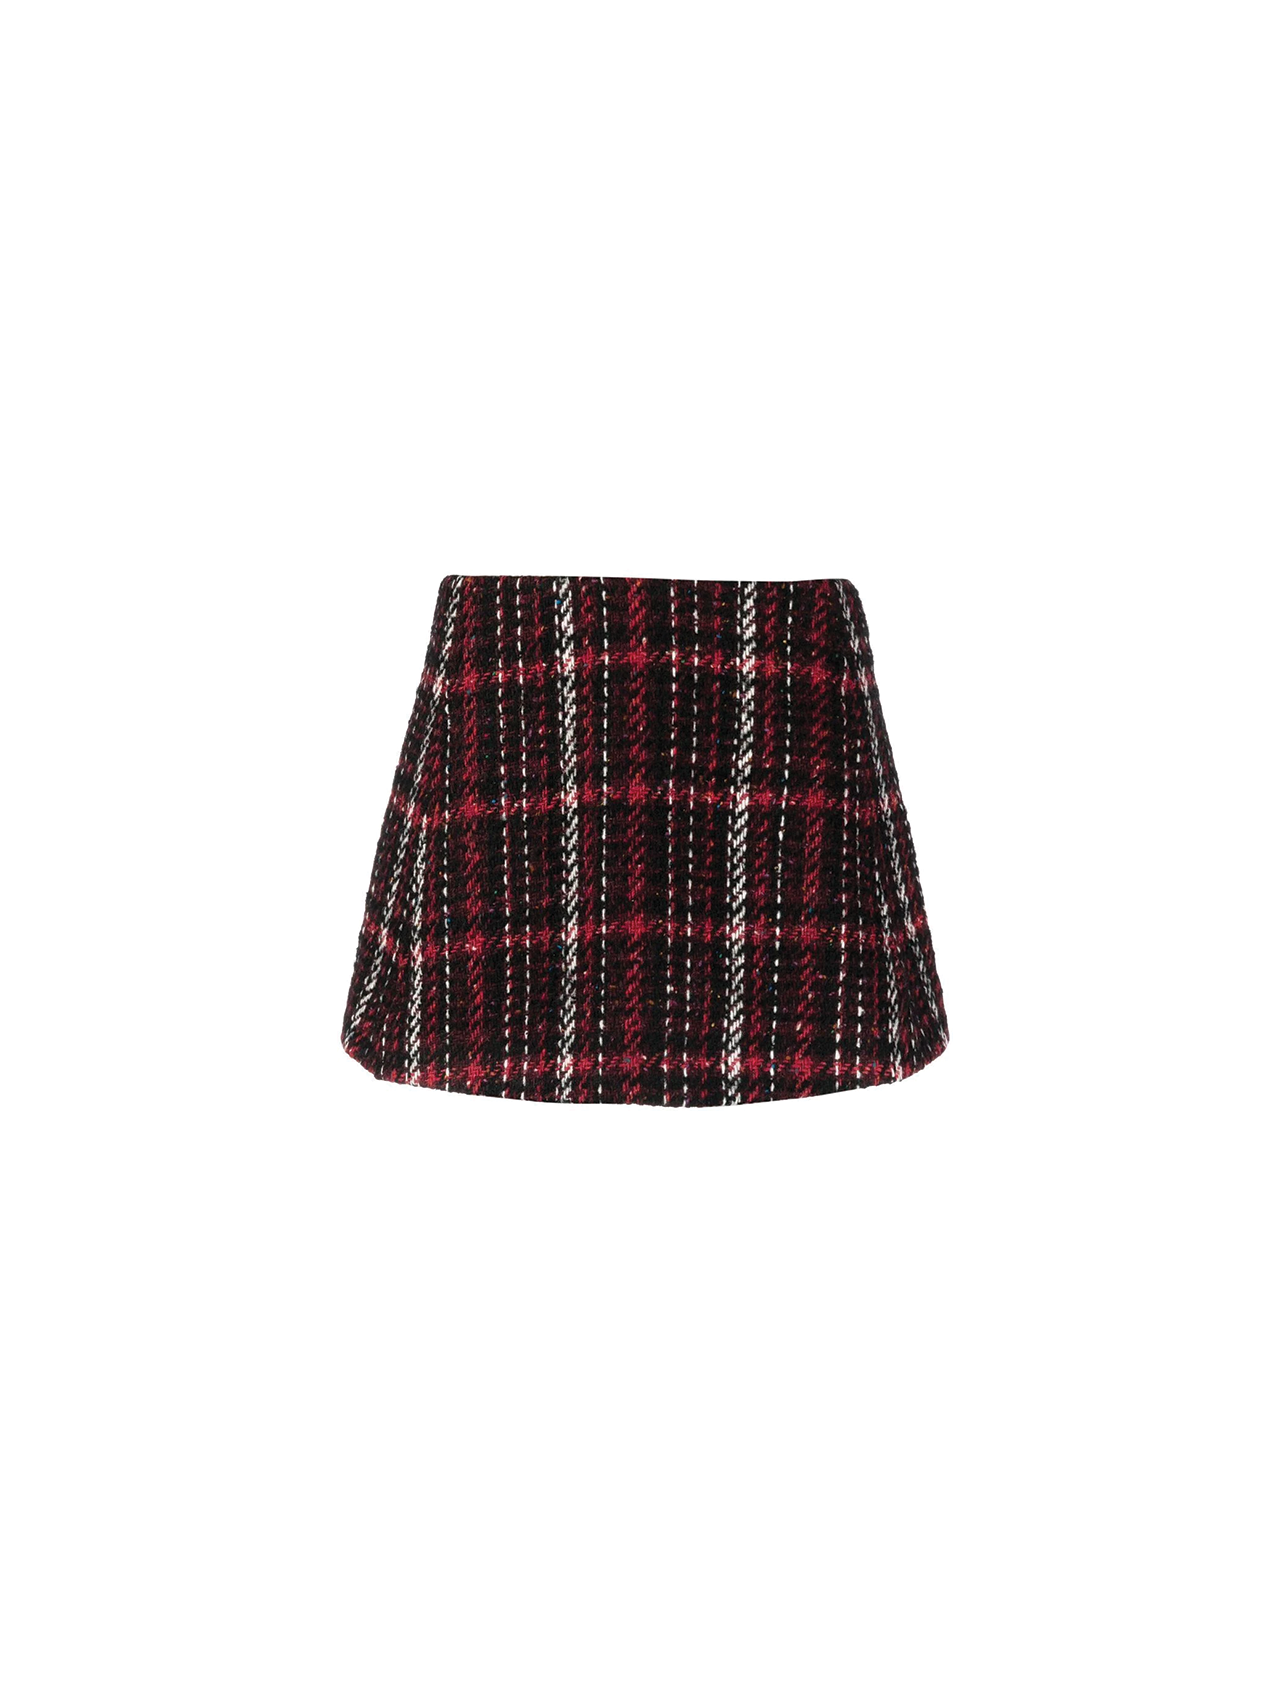 Marni Ruby Red Tweed Mini Skirt